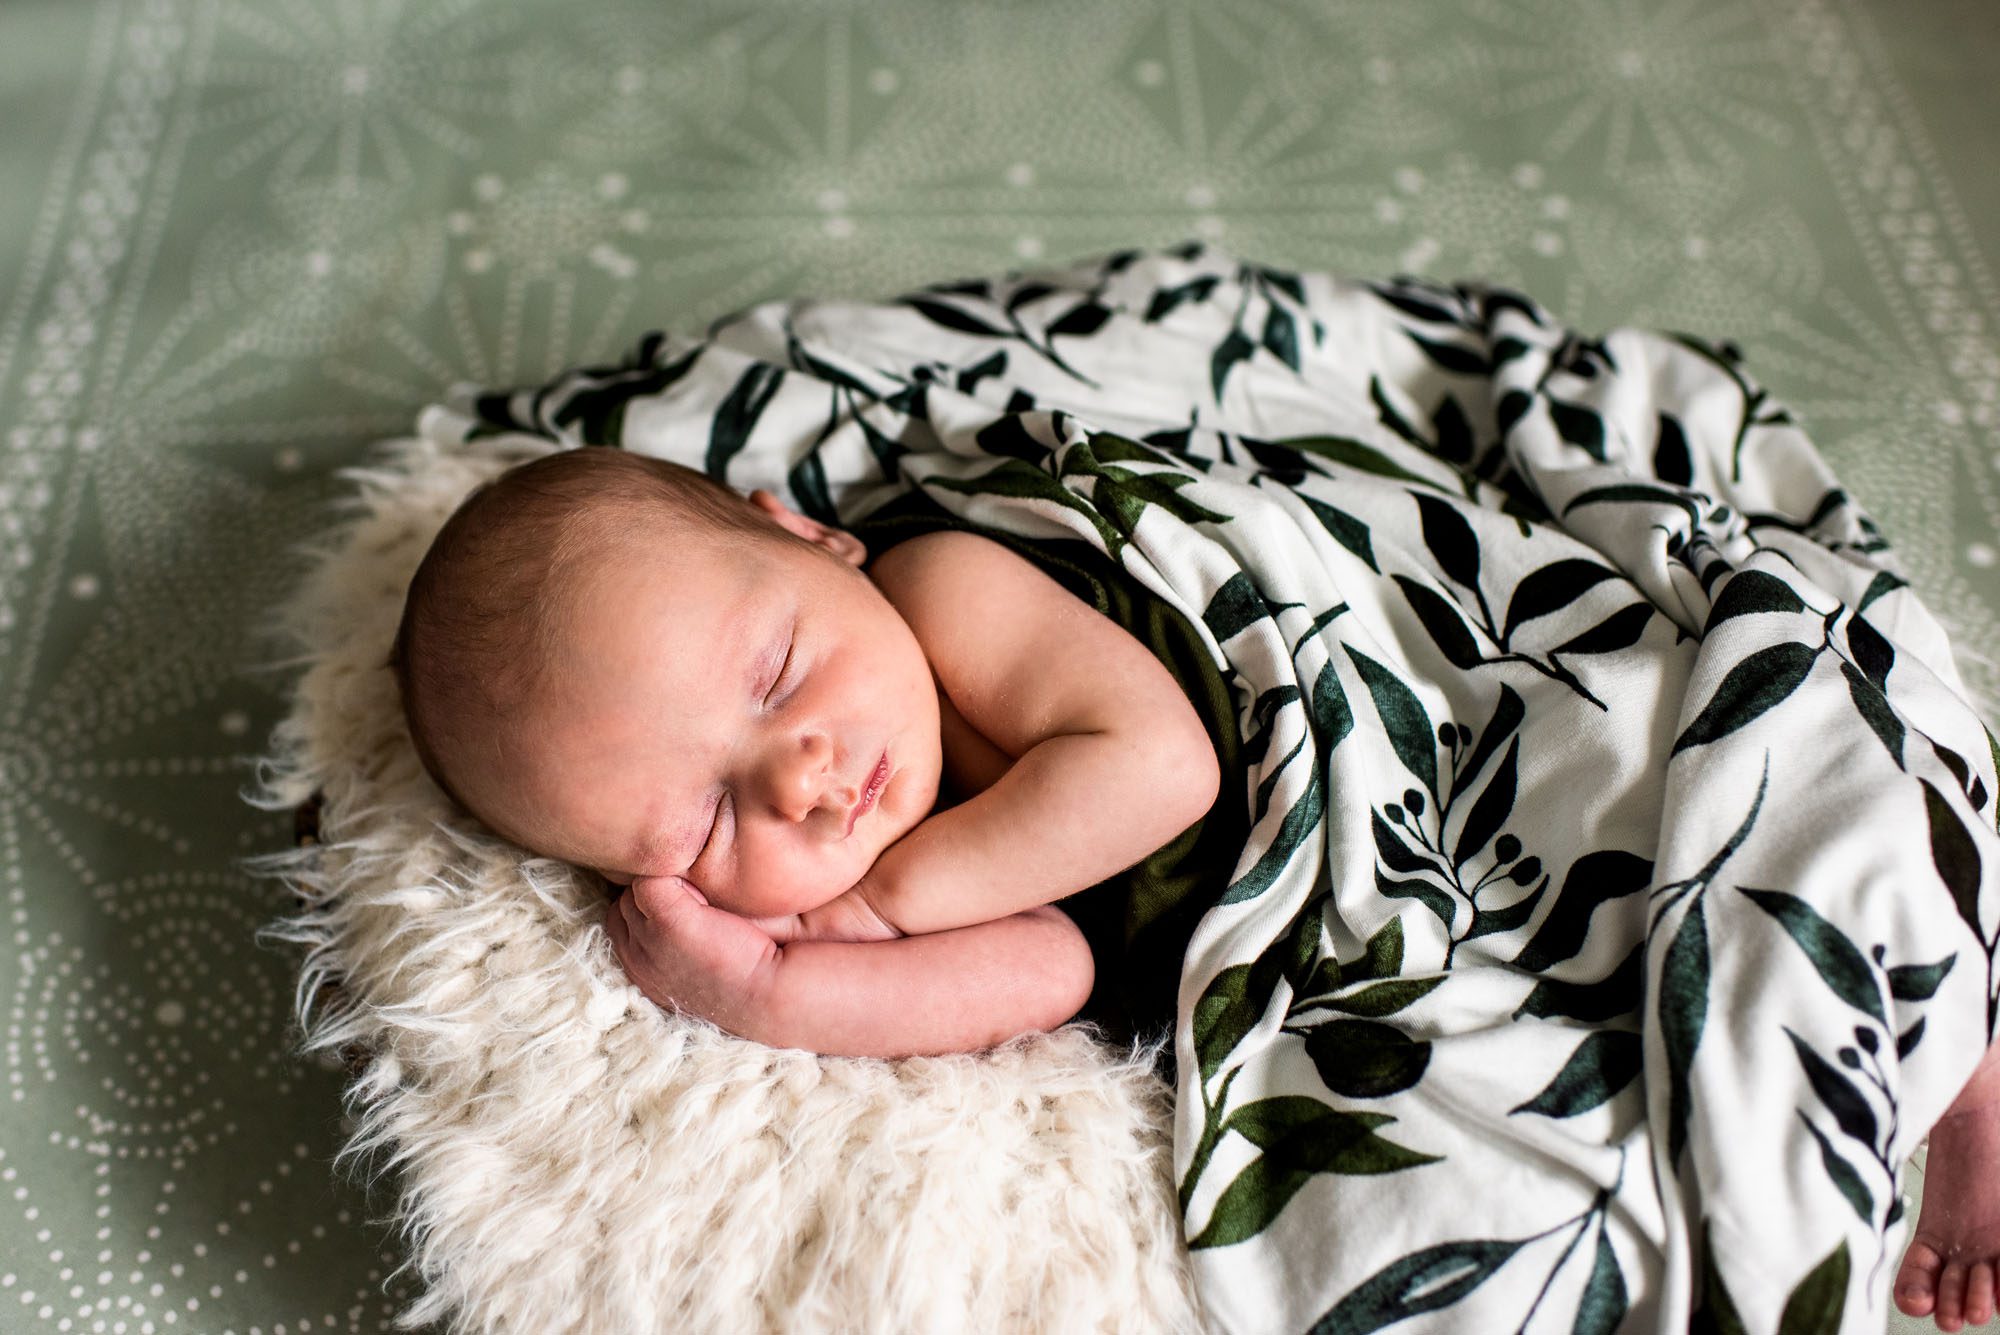 San Antonio Newborn Photographer, Close up shot of baby asleep in basket